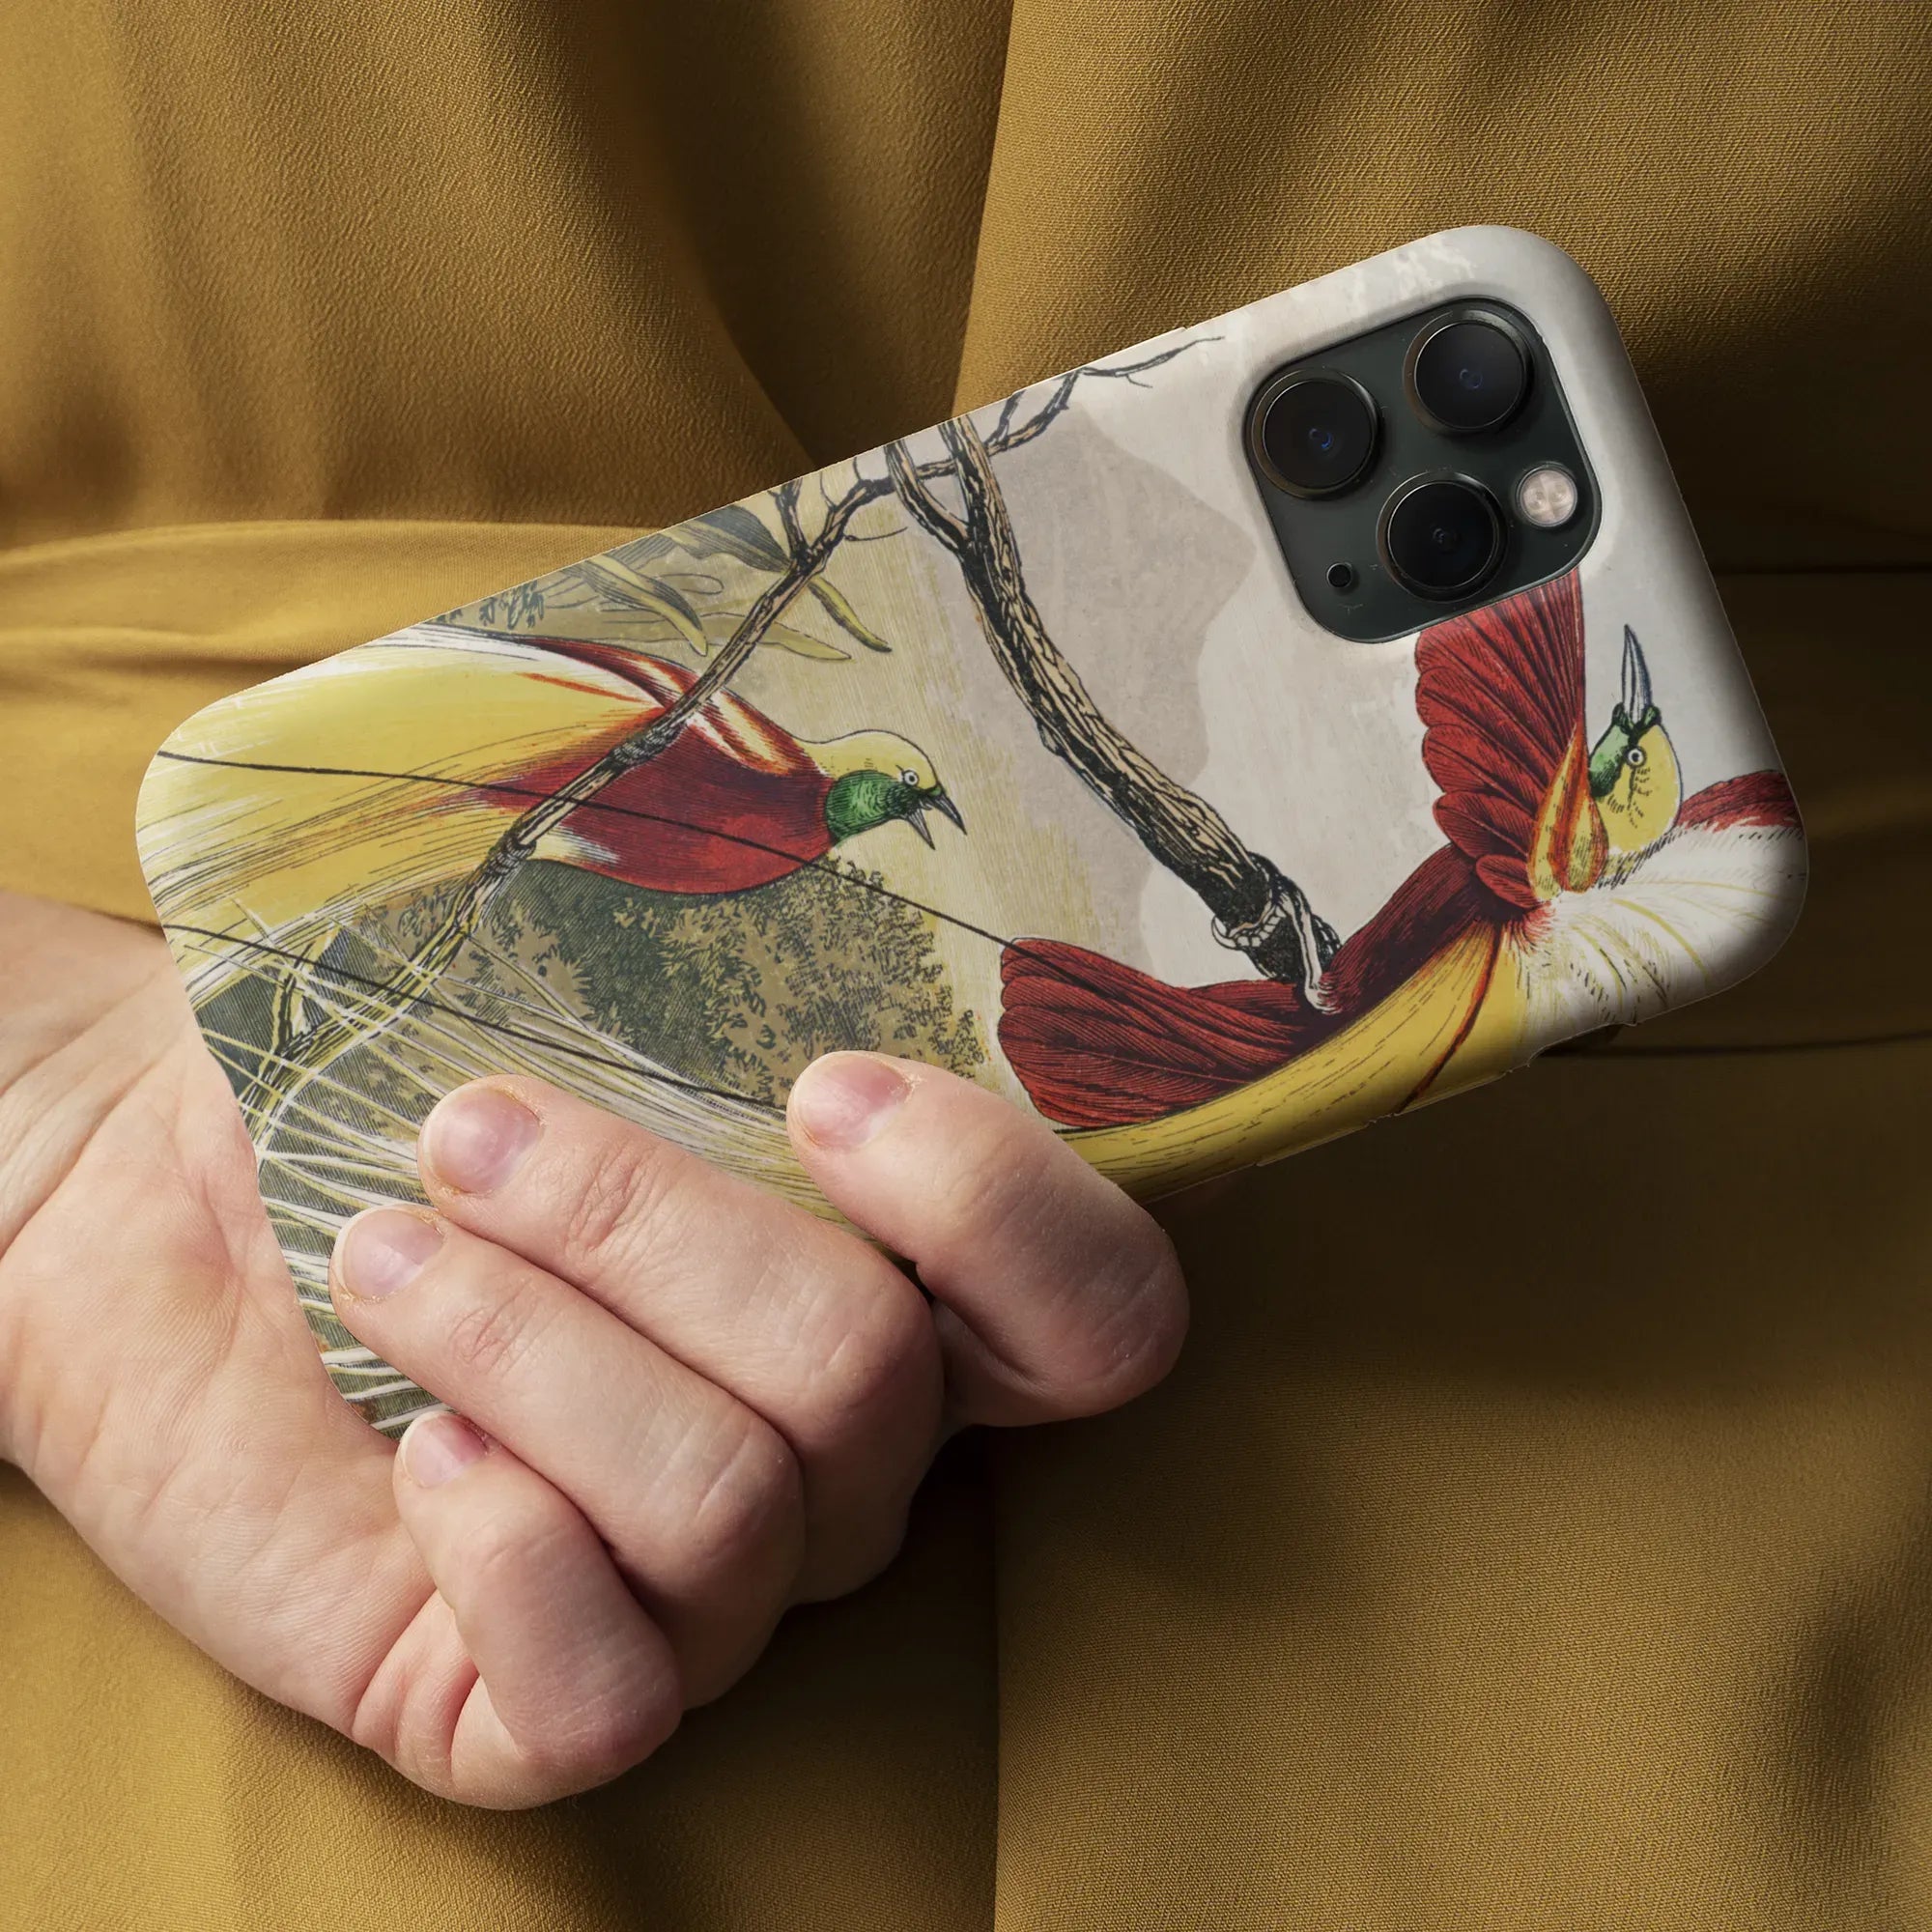 Bird Of Paradise - Animal Art Phone Case - Benjamin Fawcett - Mobile Phone Cases - Aesthetic Art